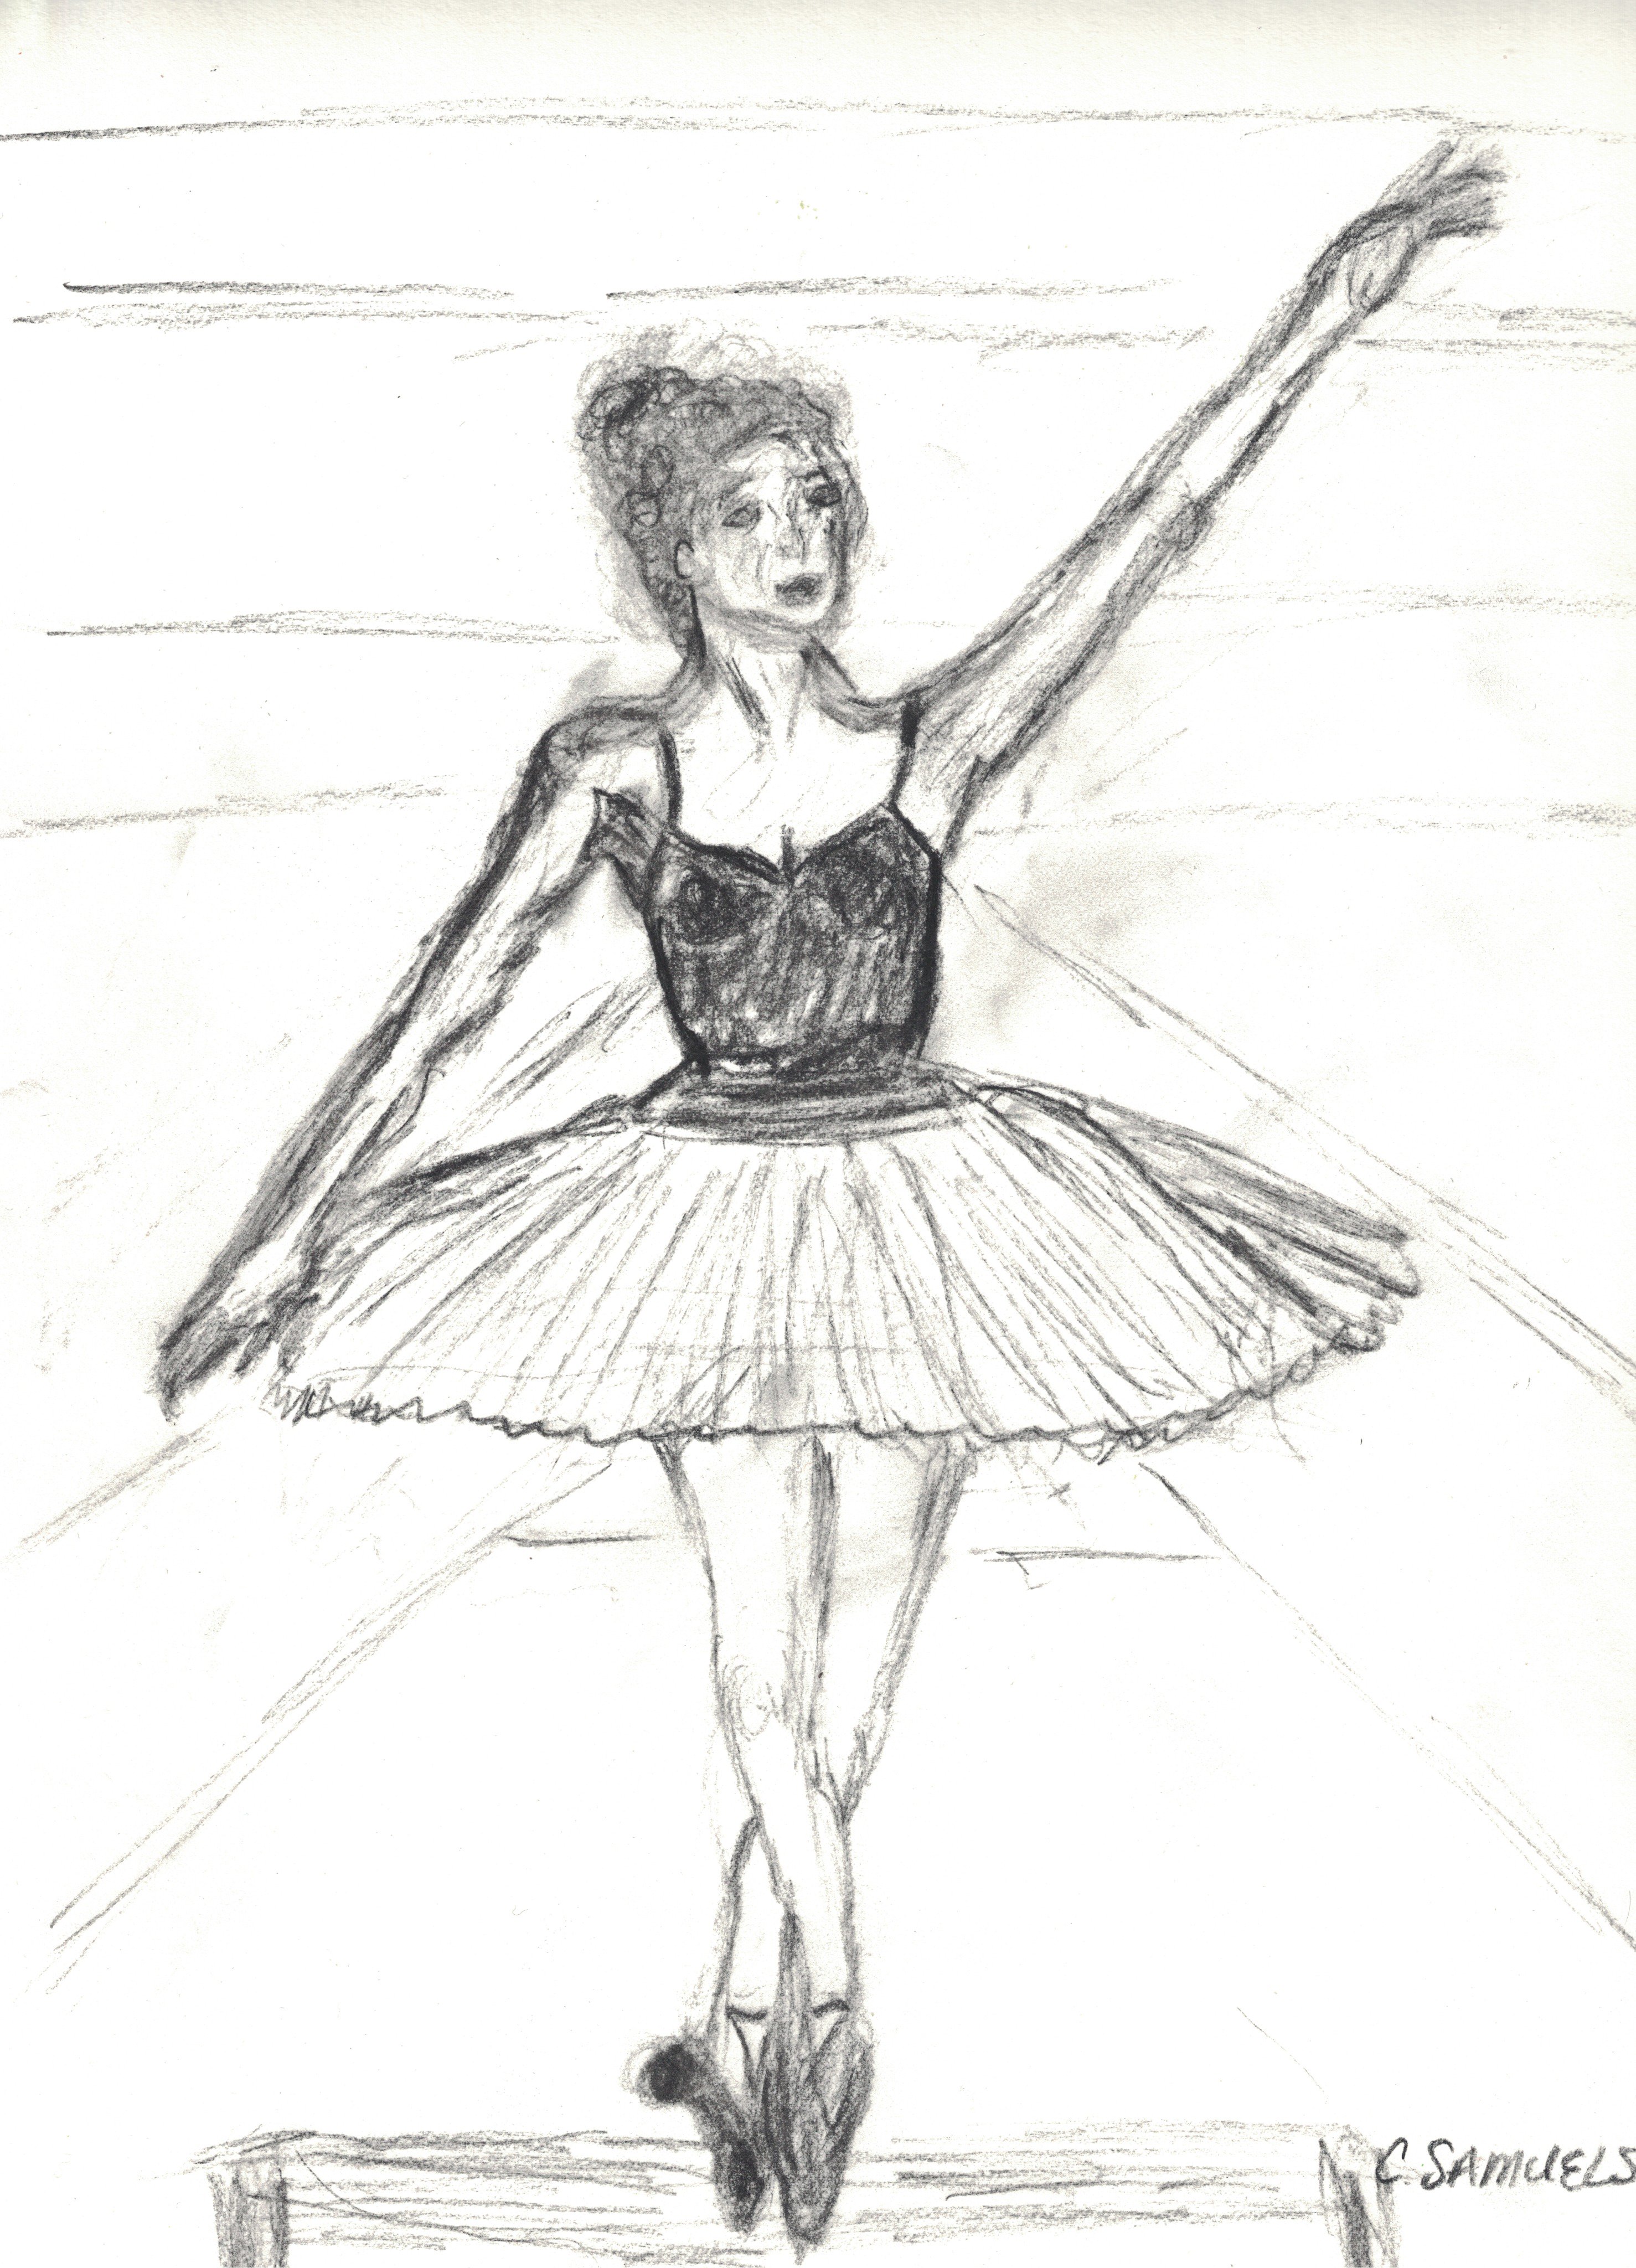 Clarise Samuels on Twitter: #dancer. #art # drawing #apco360 #ballerina #FineArtCanada https://t.co/7bJPrZieyF" / Twitter